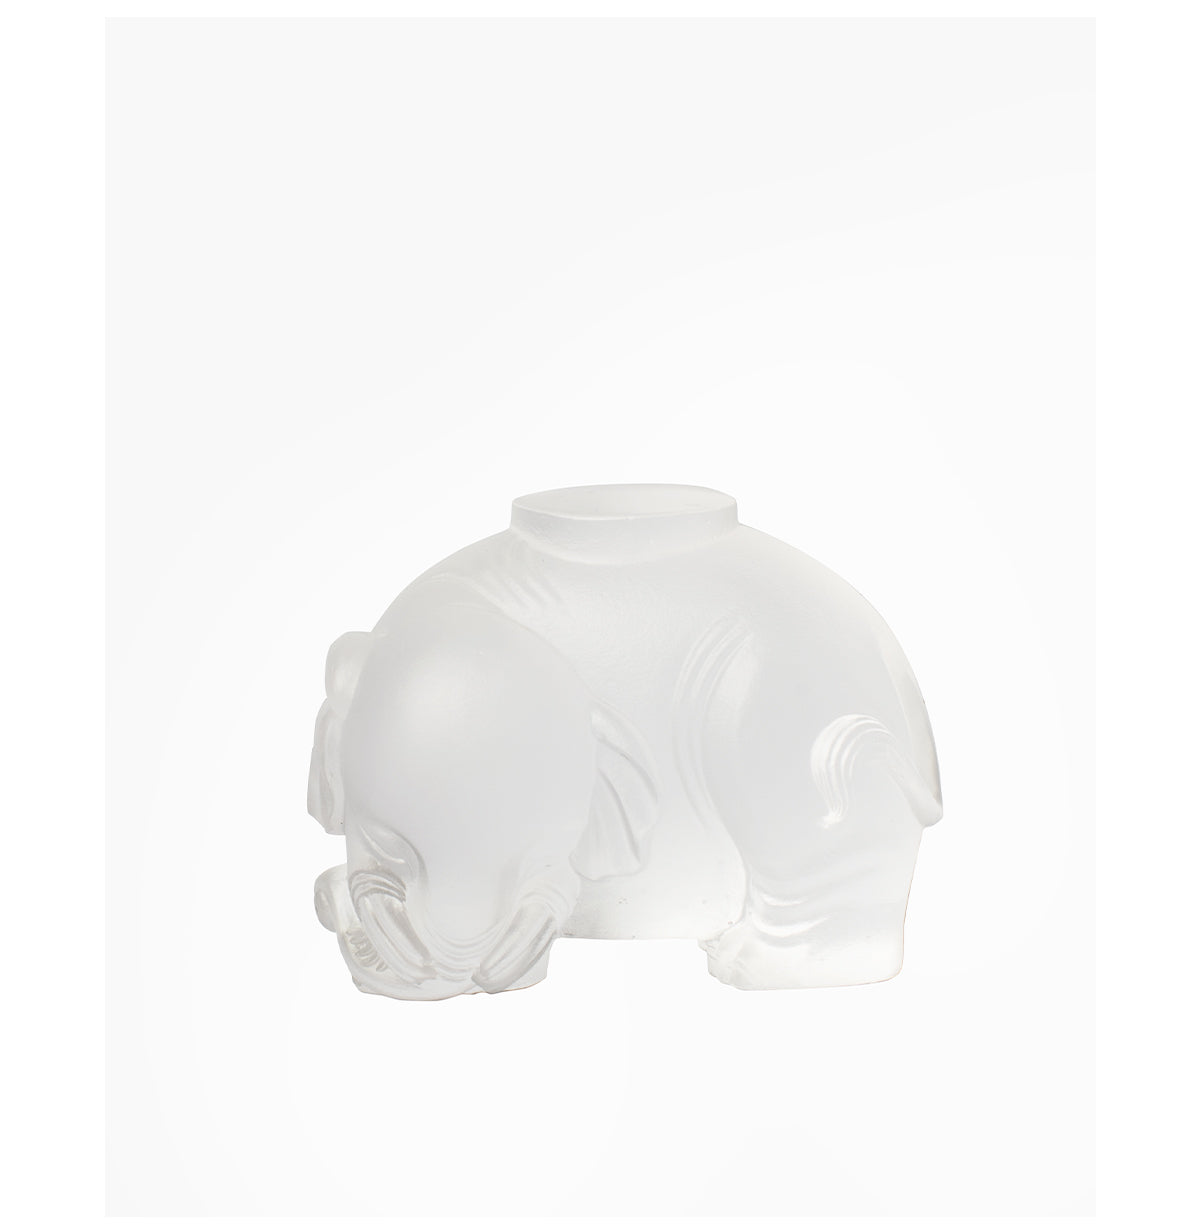 Gohobi Pate de Verre Elephant Shaped Coloured Glass Ornament Pen Holder Paperweight